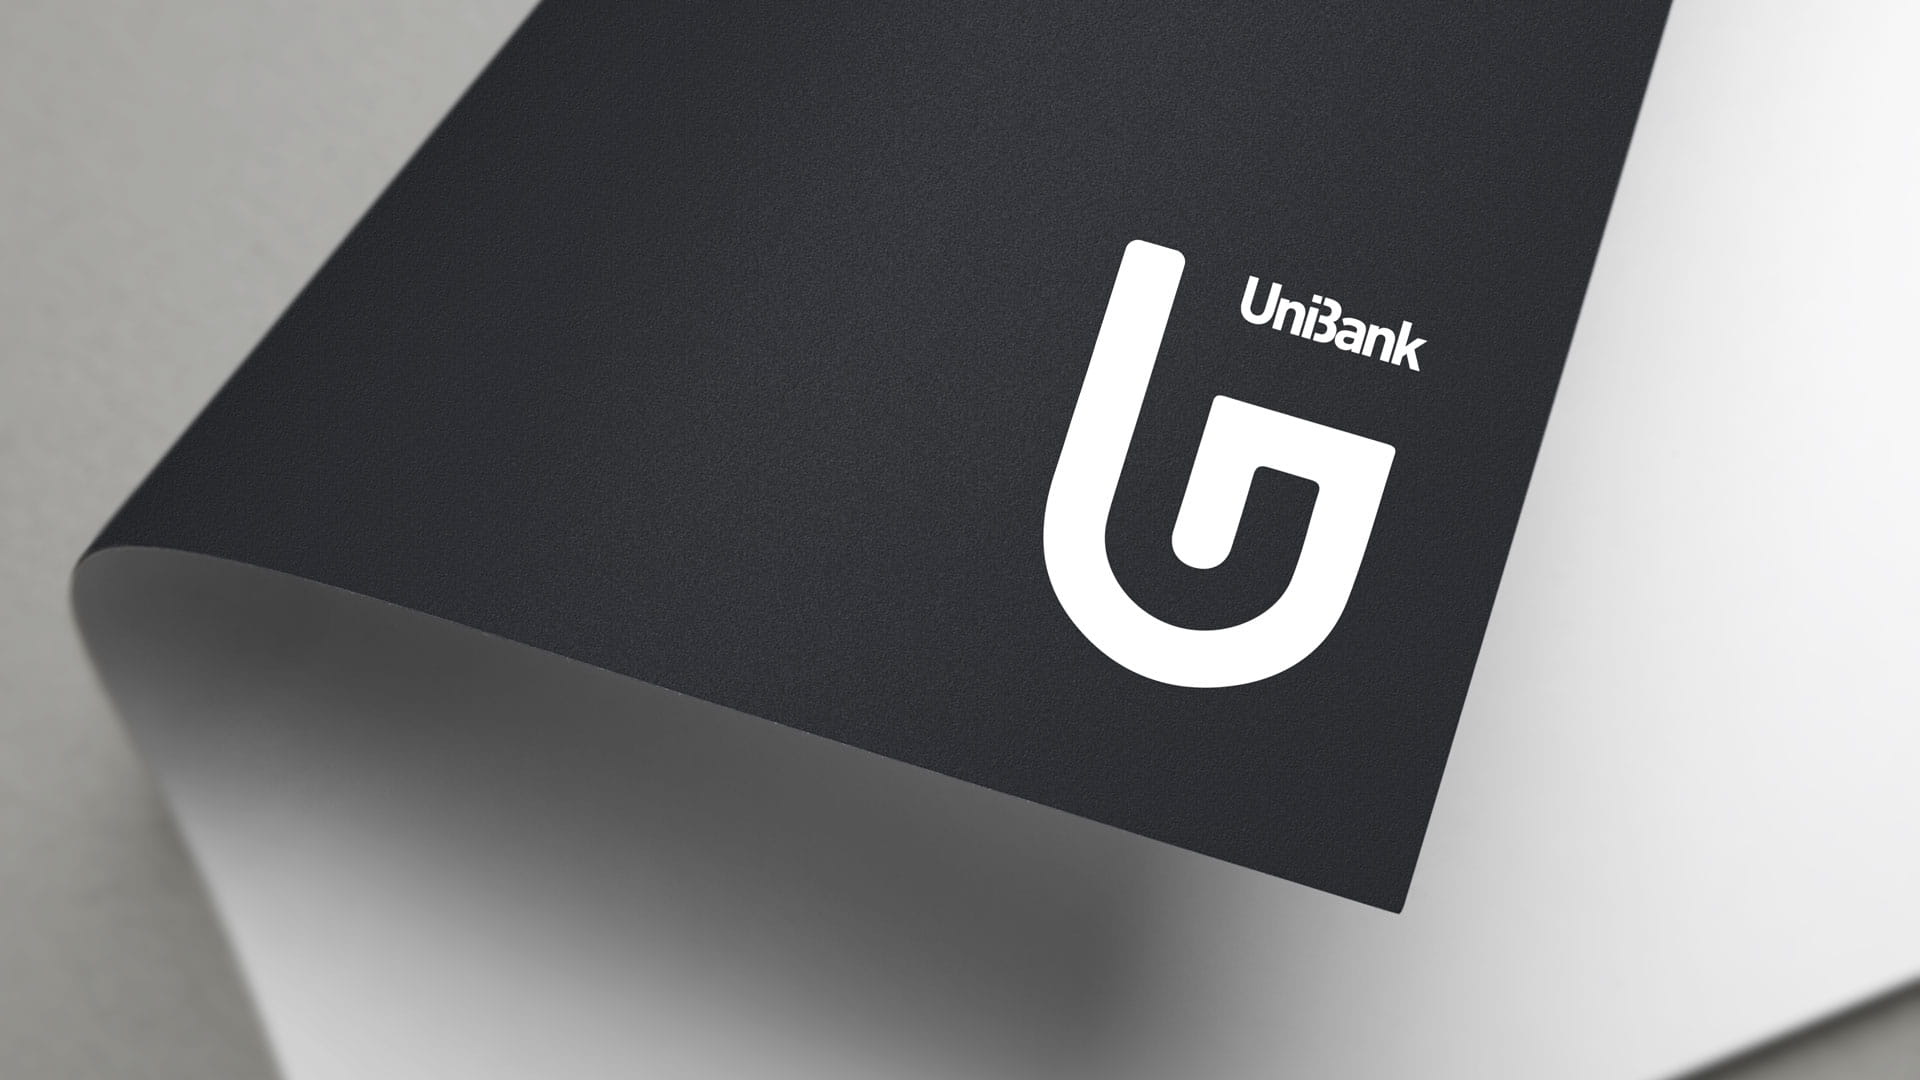 unibank-logo-display